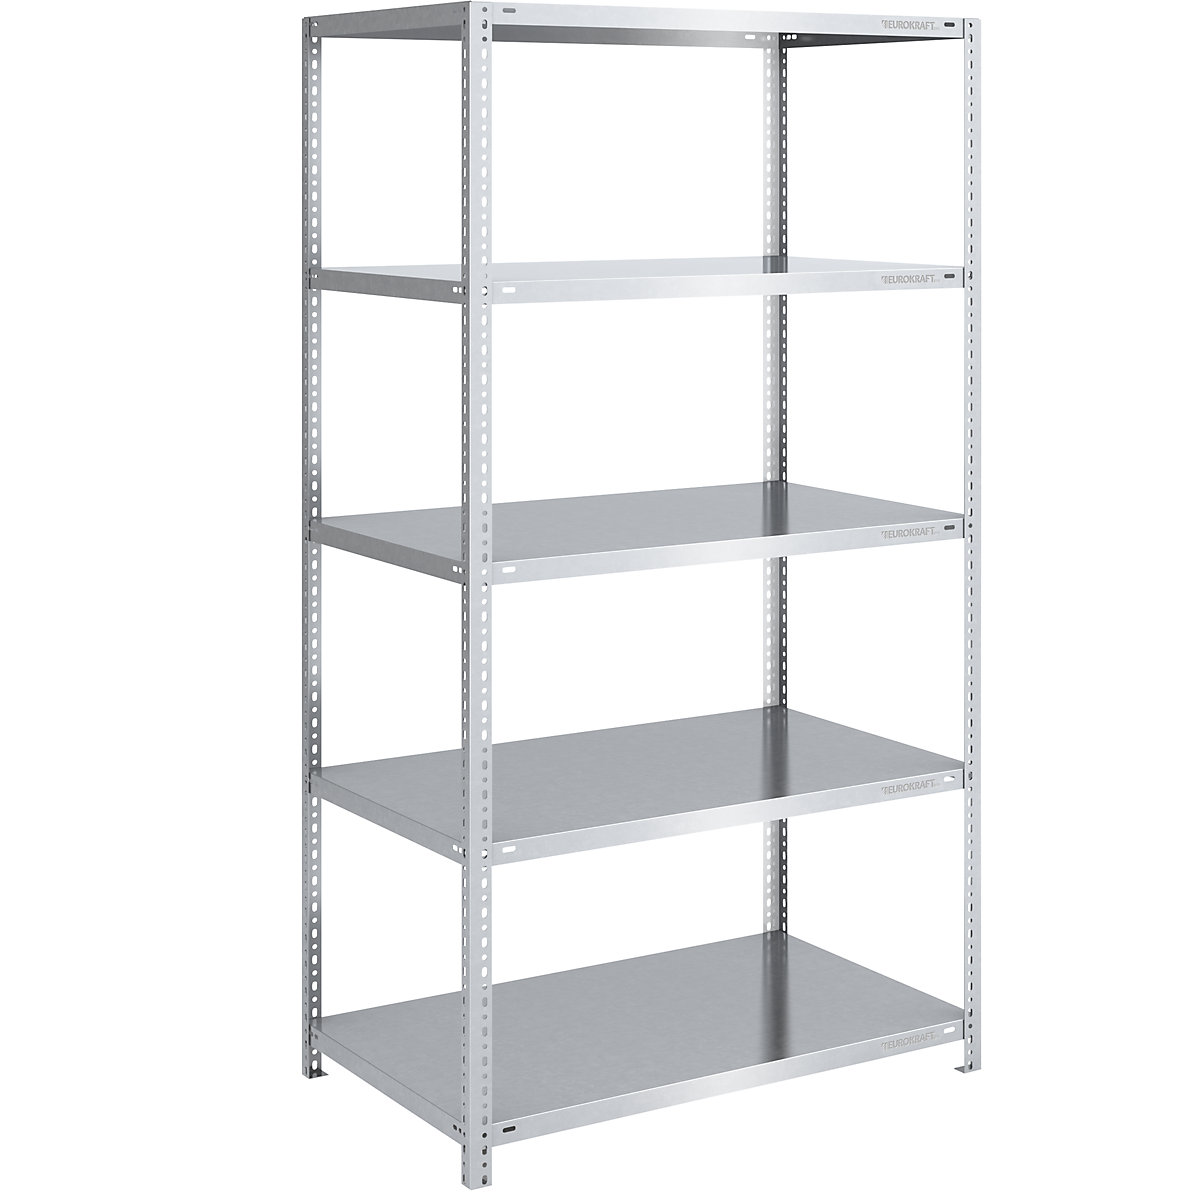 Bolt-together storage shelving, zinc plated, medium duty – eurokraft pro, shelf unit height 2000 mm, shelf width 1000 mm, depth 800 mm, standard shelf unit-8